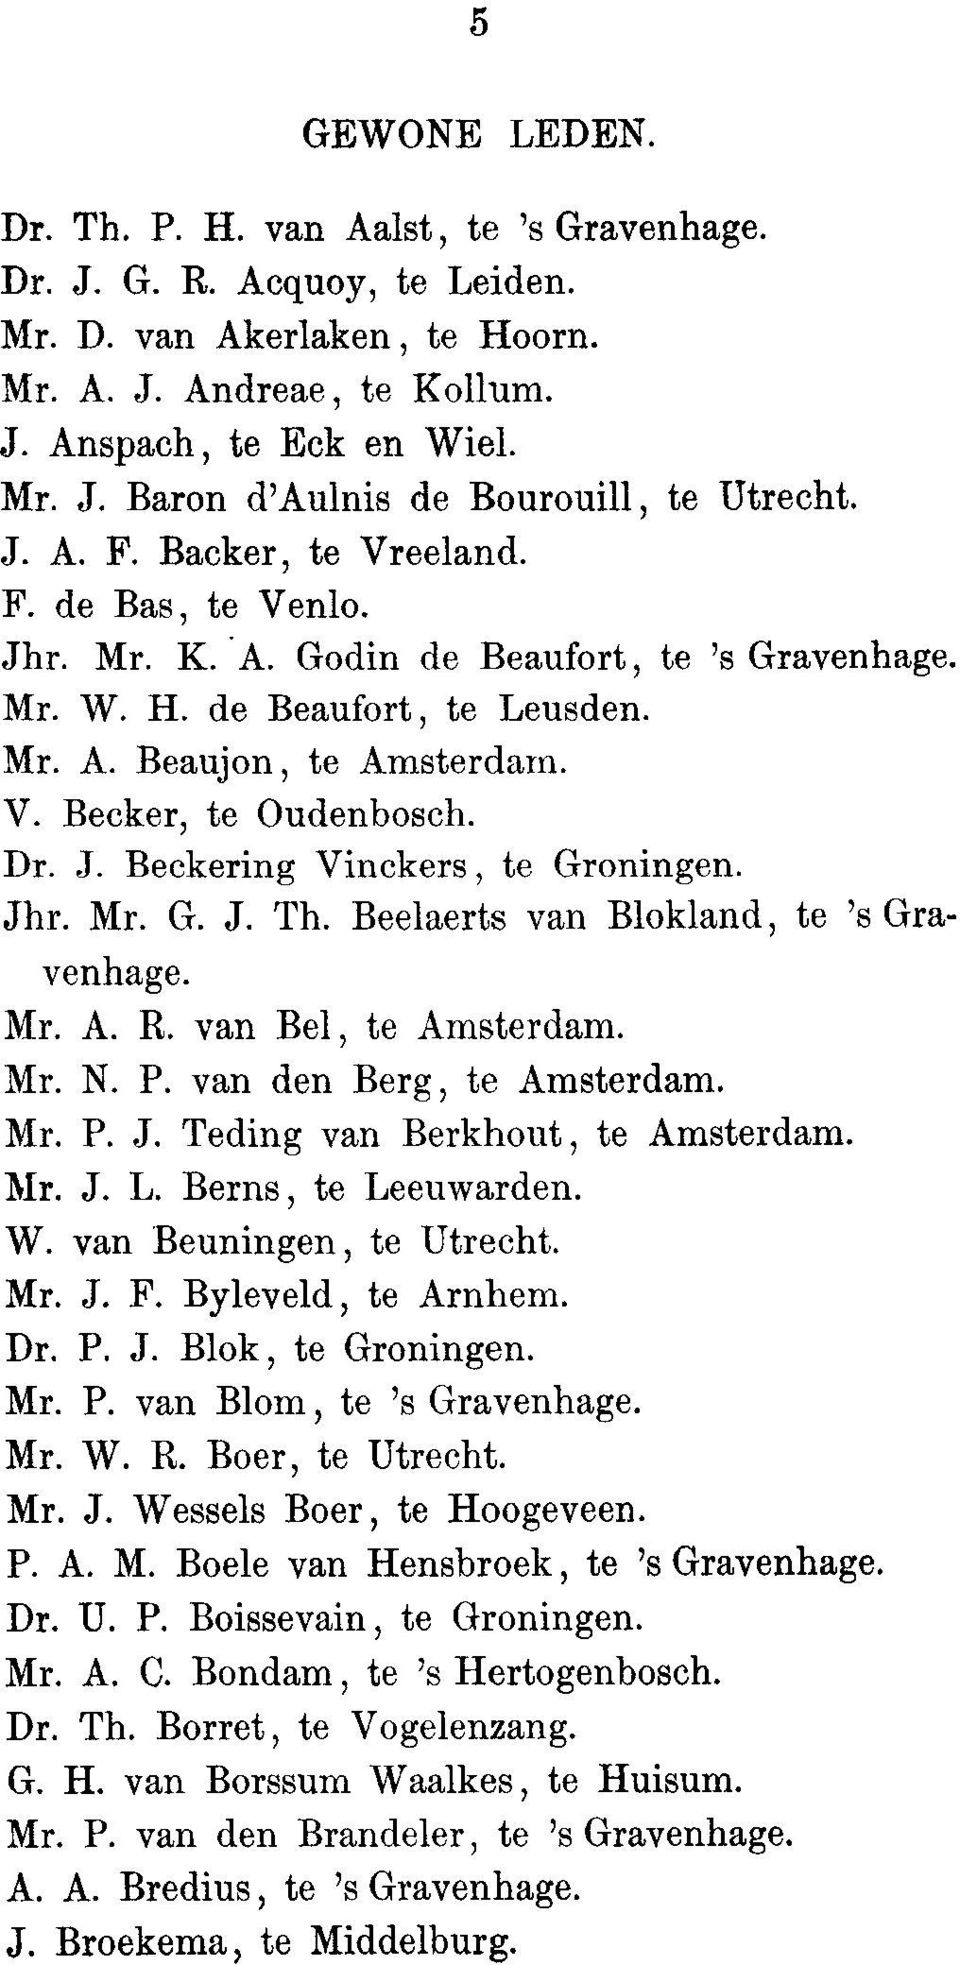 Jhr. Mr. G. J. Th. Beelaerts van Blokland, to 's Gravenhage. Mr. A. R. van Bel, to Amsterdam. Mr. N. P. van den Berg, to Amsterdam. Mr. P. J. Telling van Berkhout, to Amsterdam. Mr. J. L.